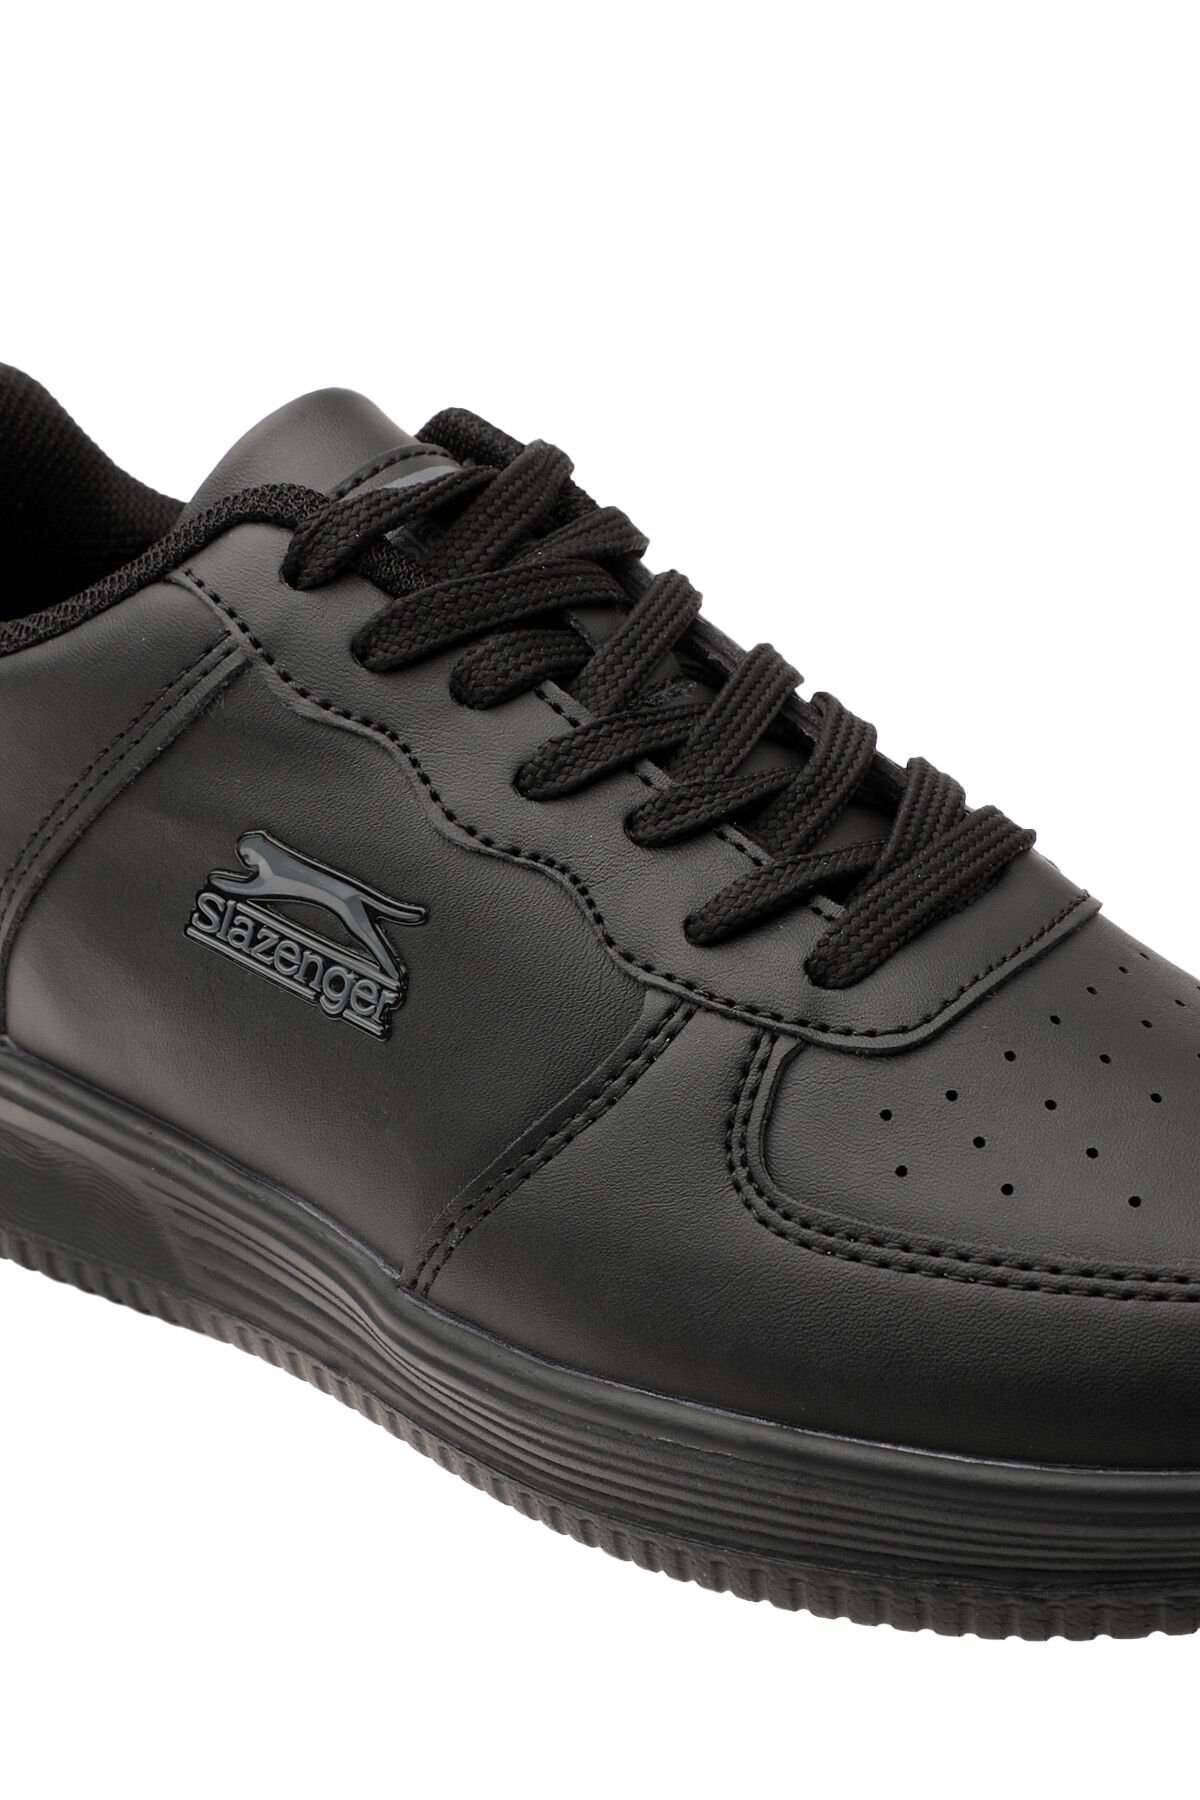 Slazenger CARBON Sneaker Kadın Ayakkabı Siyah / Siyah - Thumbnail